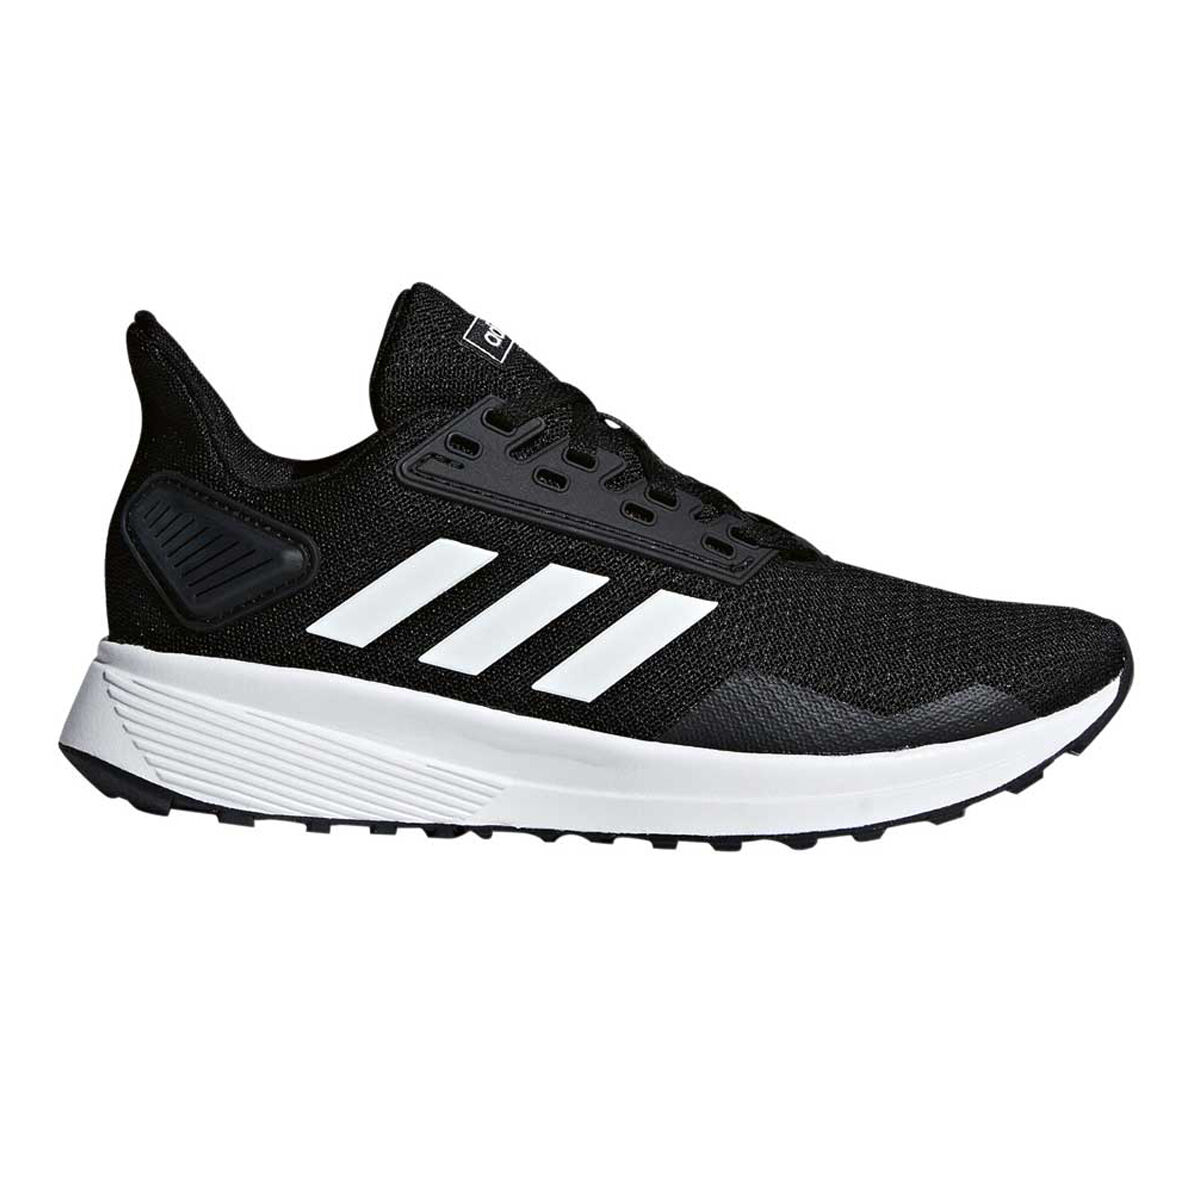 rebel sport cross trainer shoes